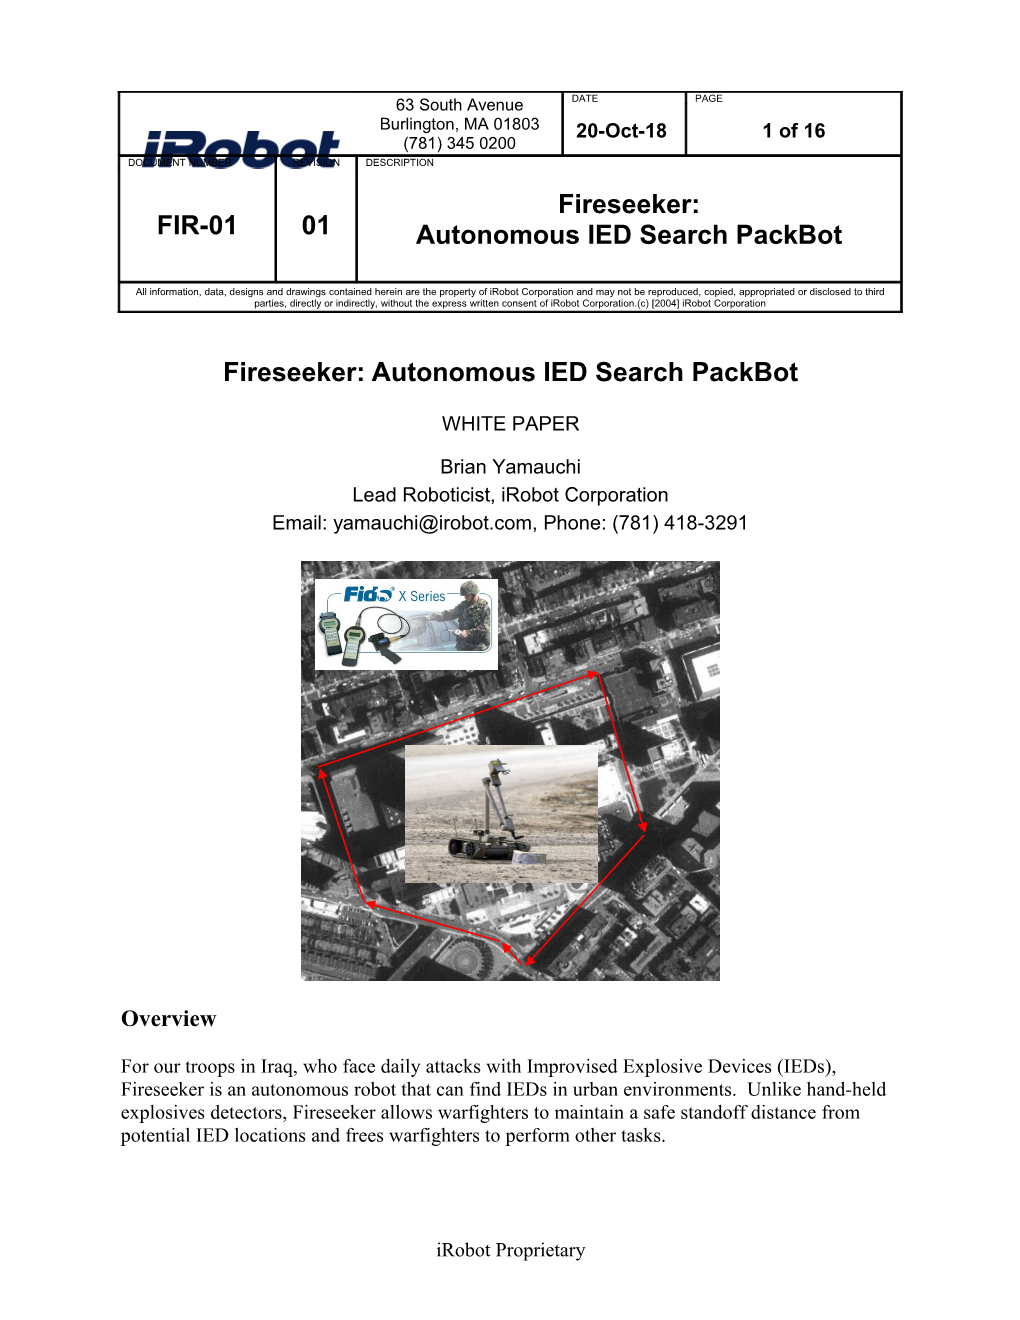 Fireseeker: Autonomous IED Search Packbot